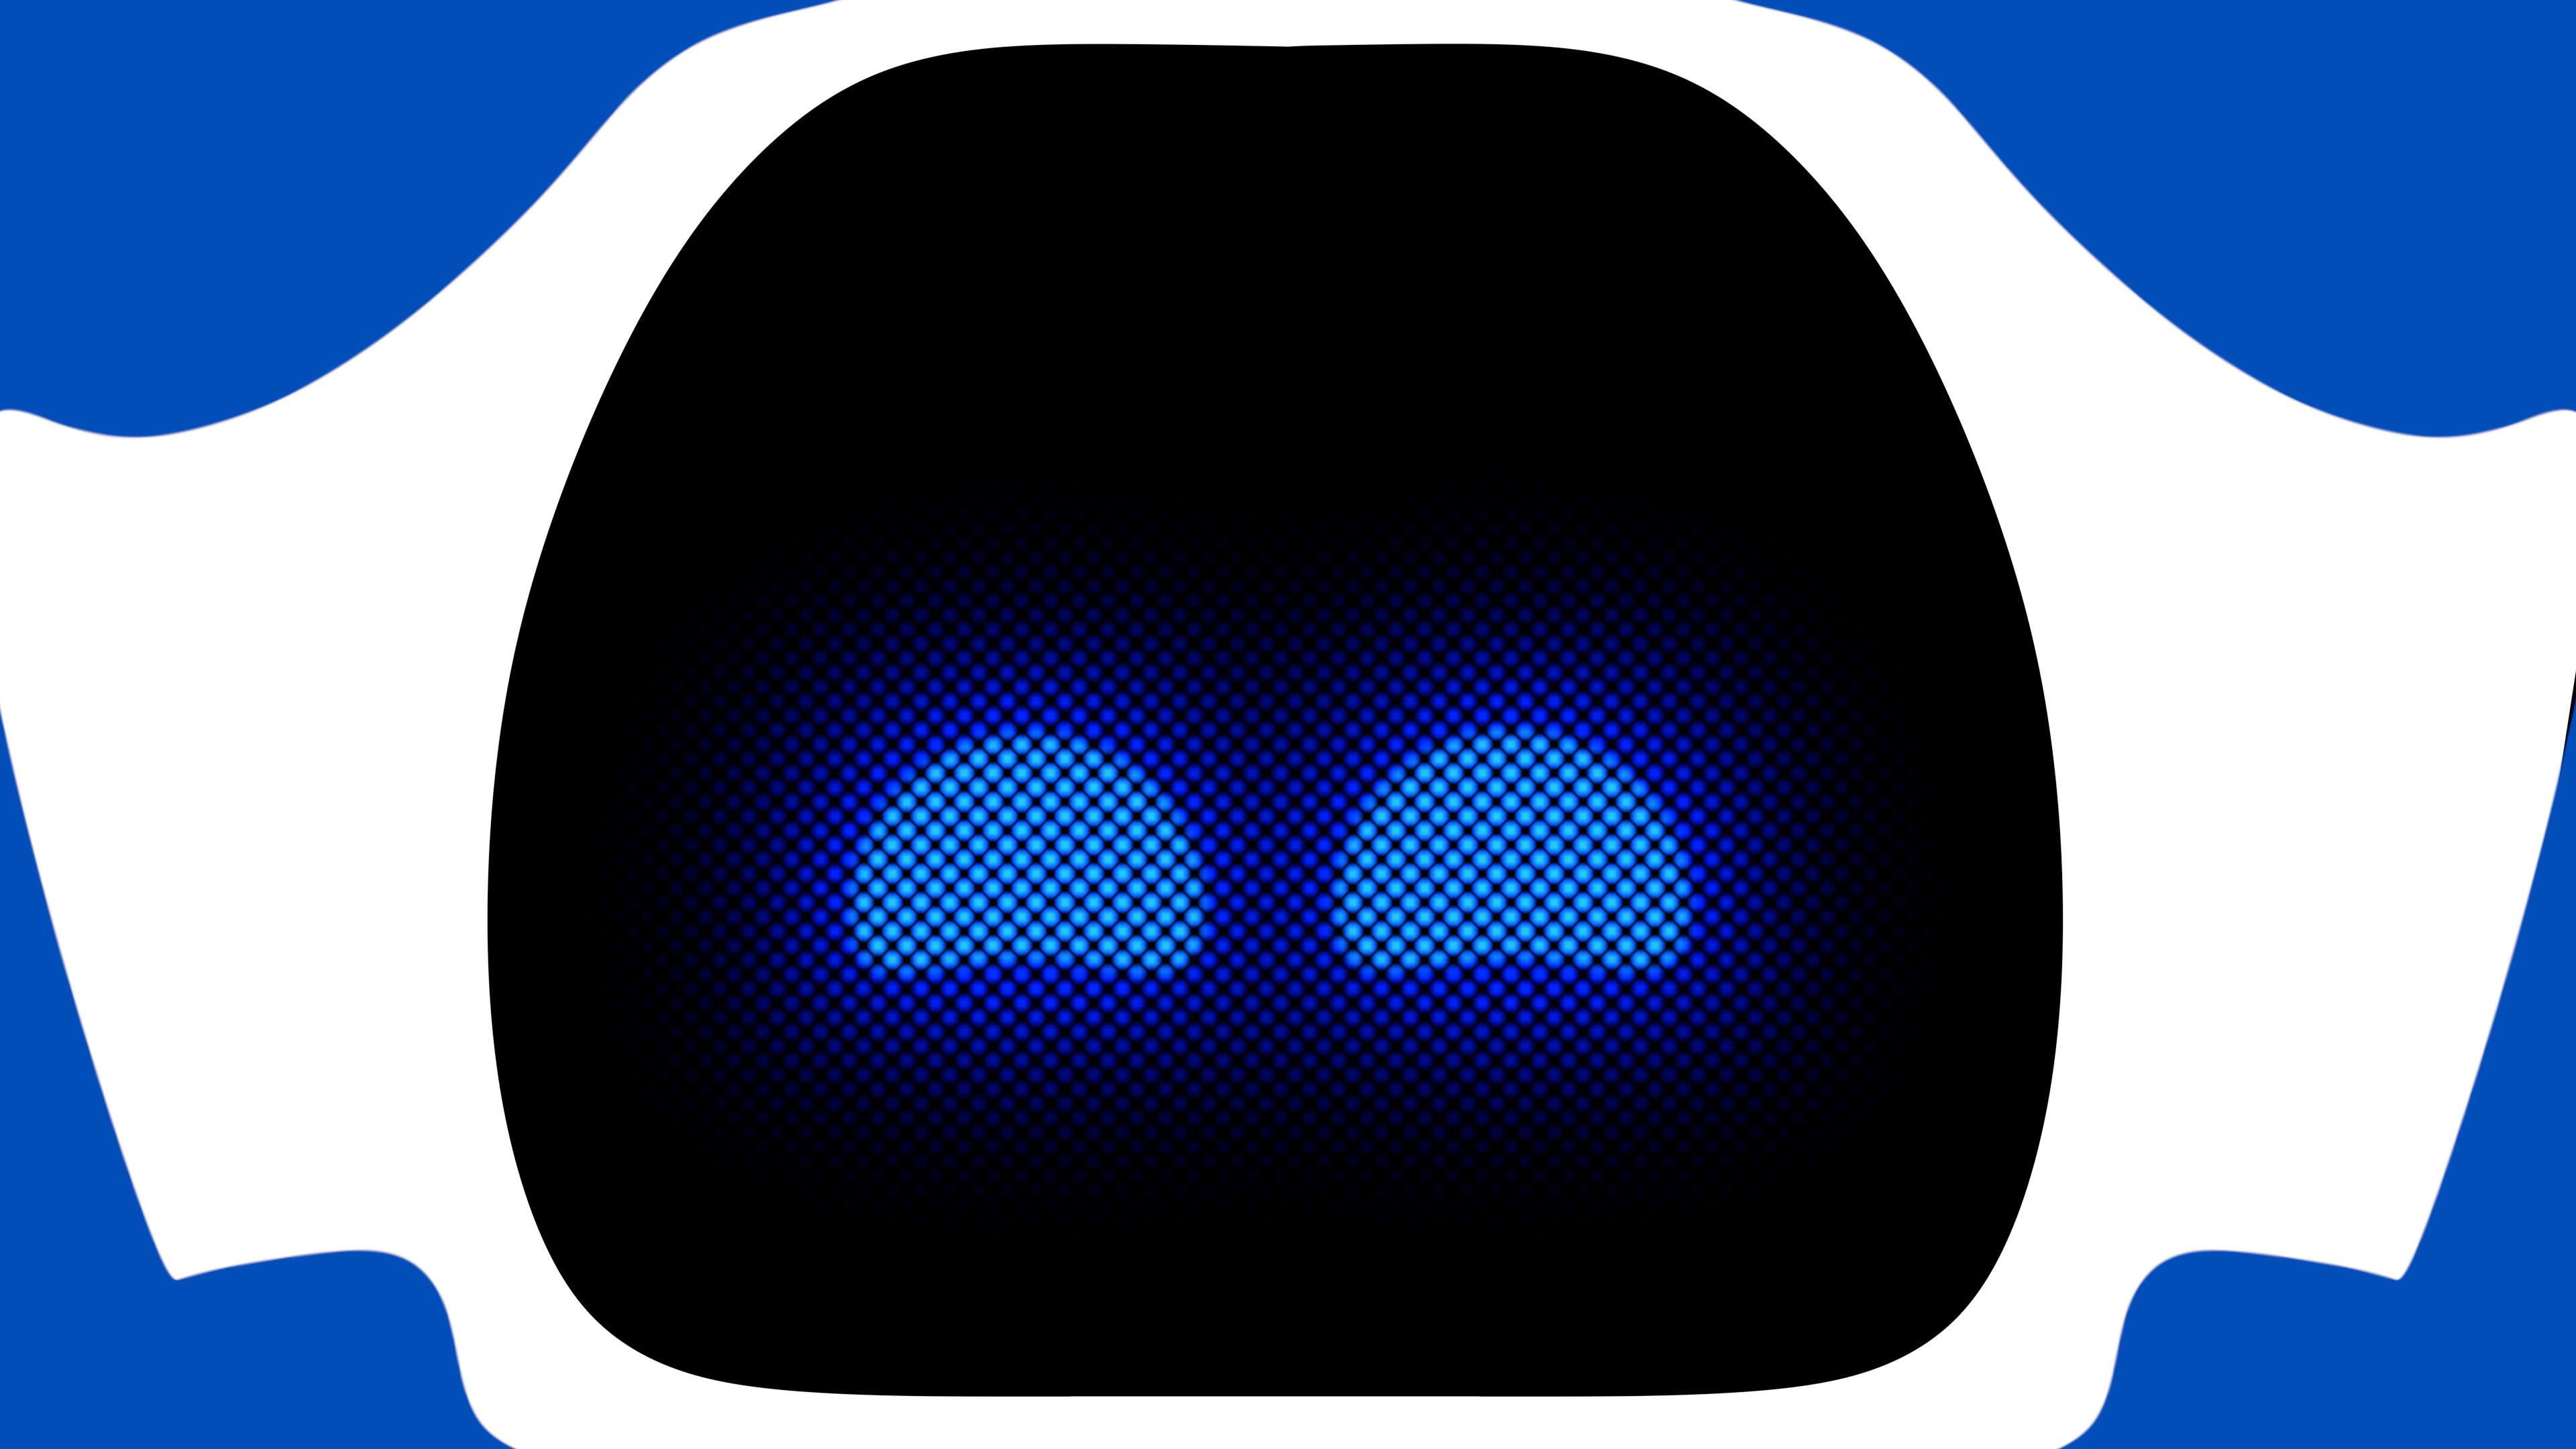 Astro Bot Wallpaper - Astro Bot Alien , HD Wallpaper & Backgrounds